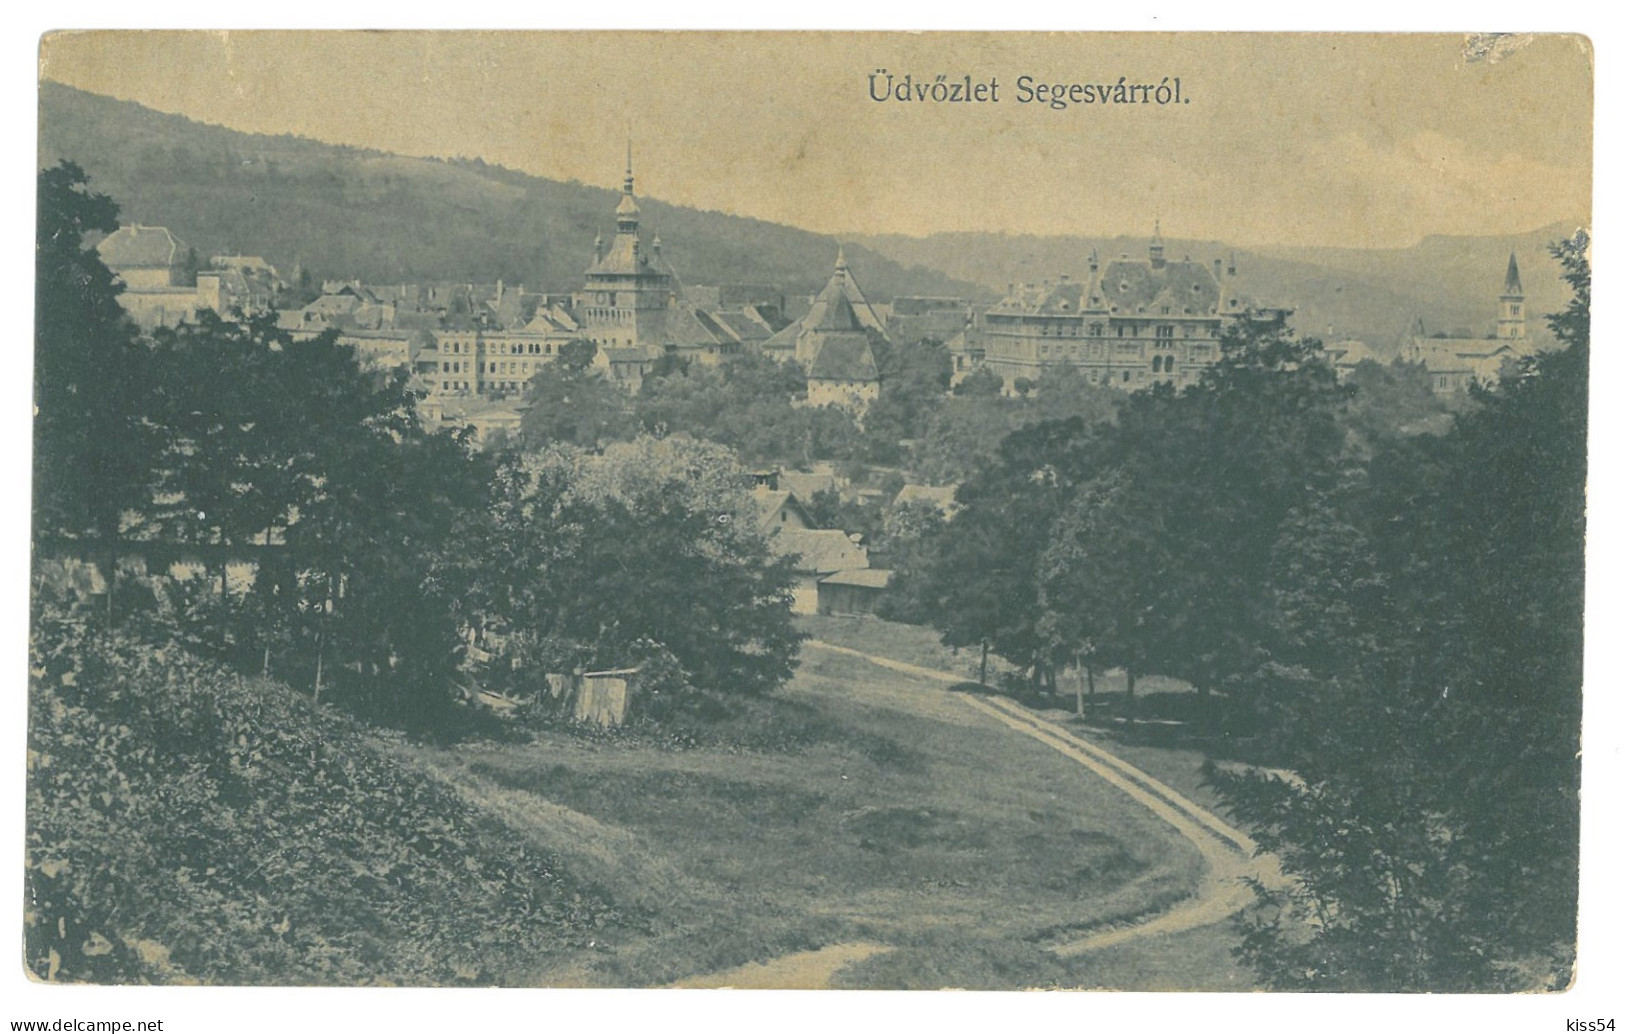 RO 77 - 17524 SIGHISOARA, Mures, Panorama, Romania - Old Postcard, CENSOR - Used - 1916 - Romania